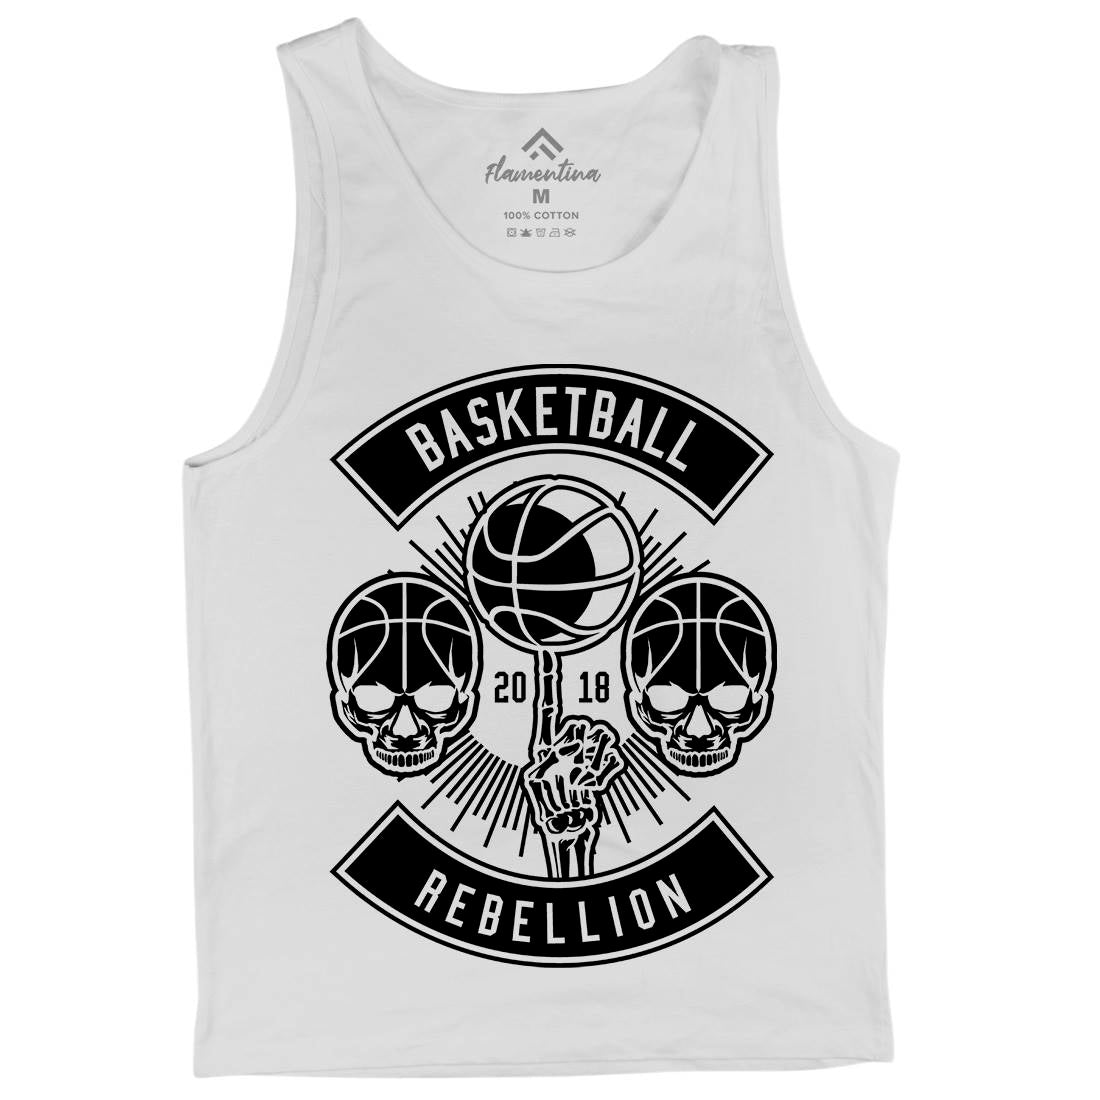 Basketball Rebellion Mens Tank Top Vest Sport B492